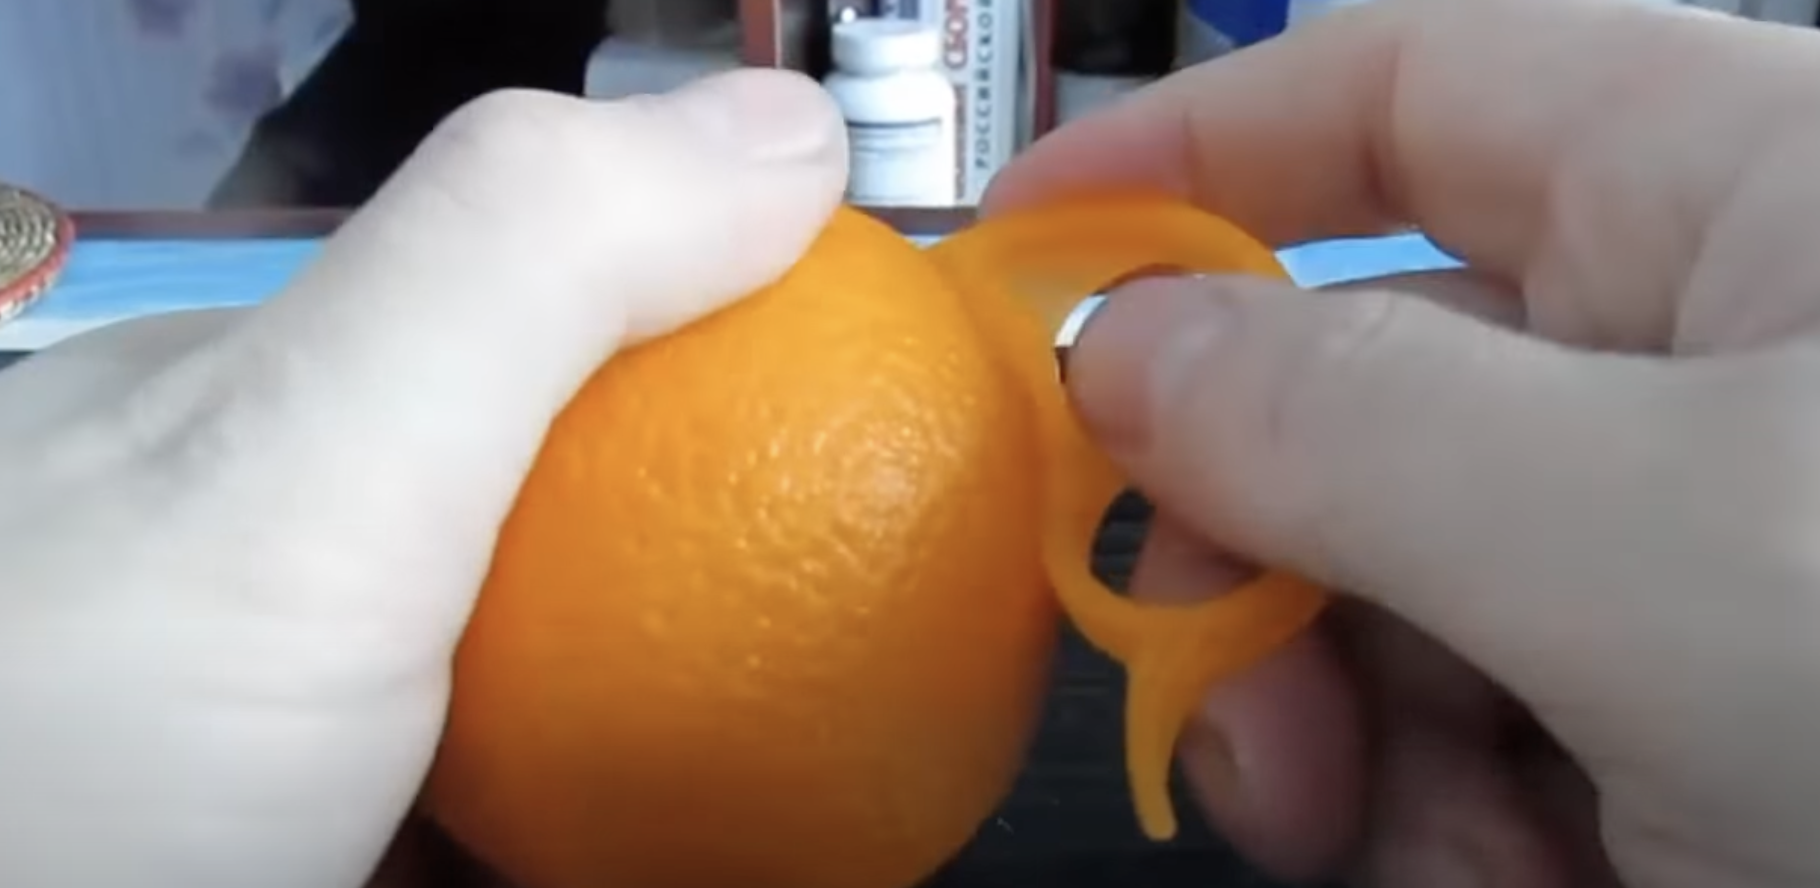 A person using an orange peeler | Source: youtube.com/@zetira4582